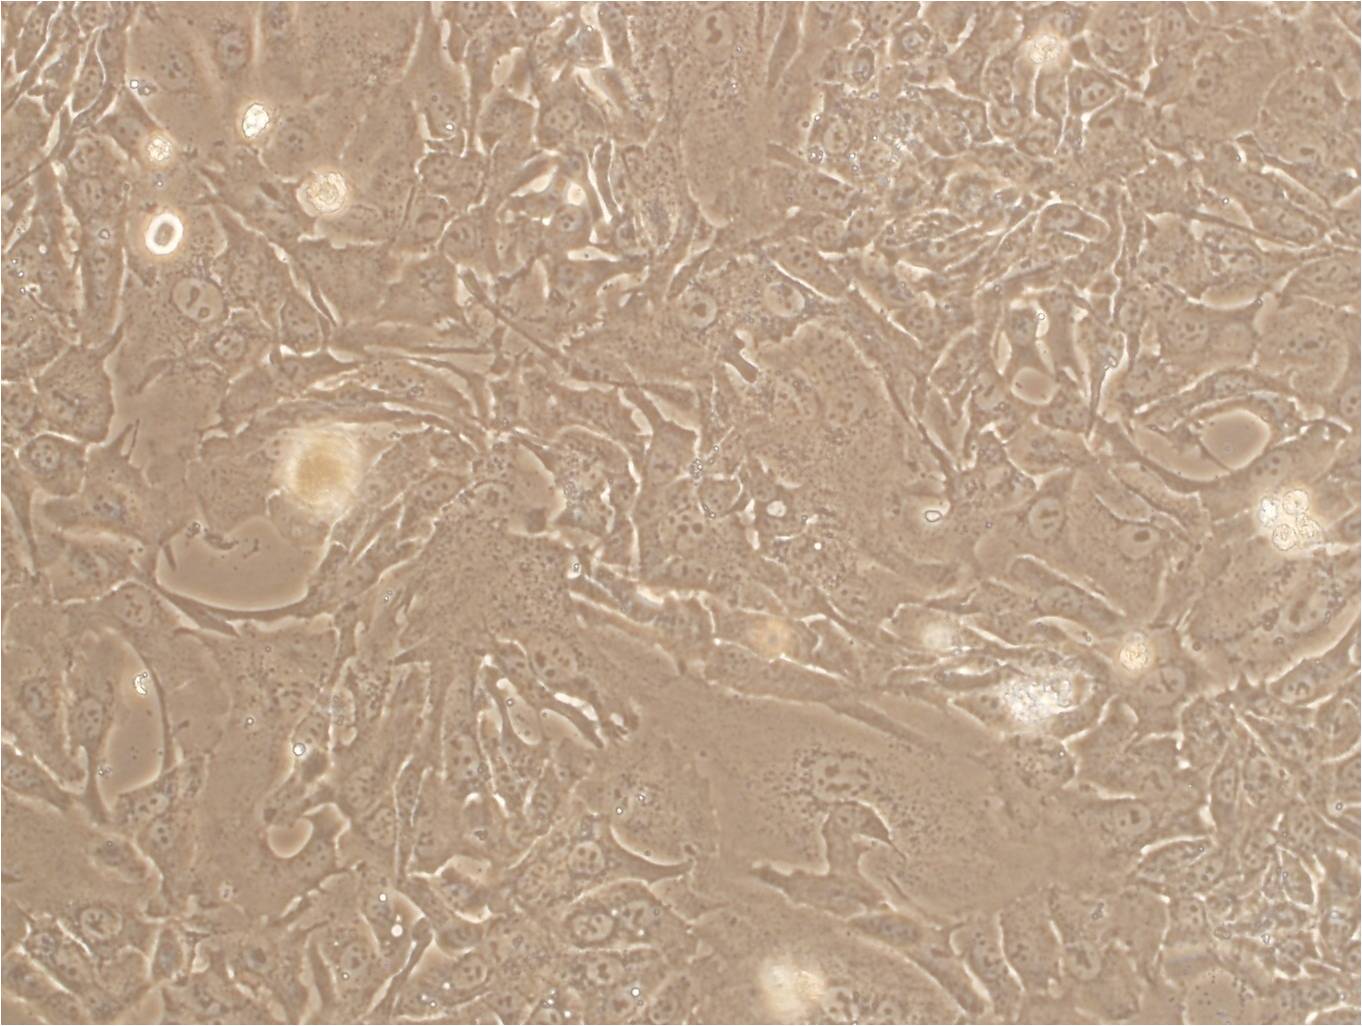 MCF-7 Cells|人乳腺癌克隆细胞(包送STR鉴定报告)前列腺癌克隆细胞(包送STR鉴定报告)